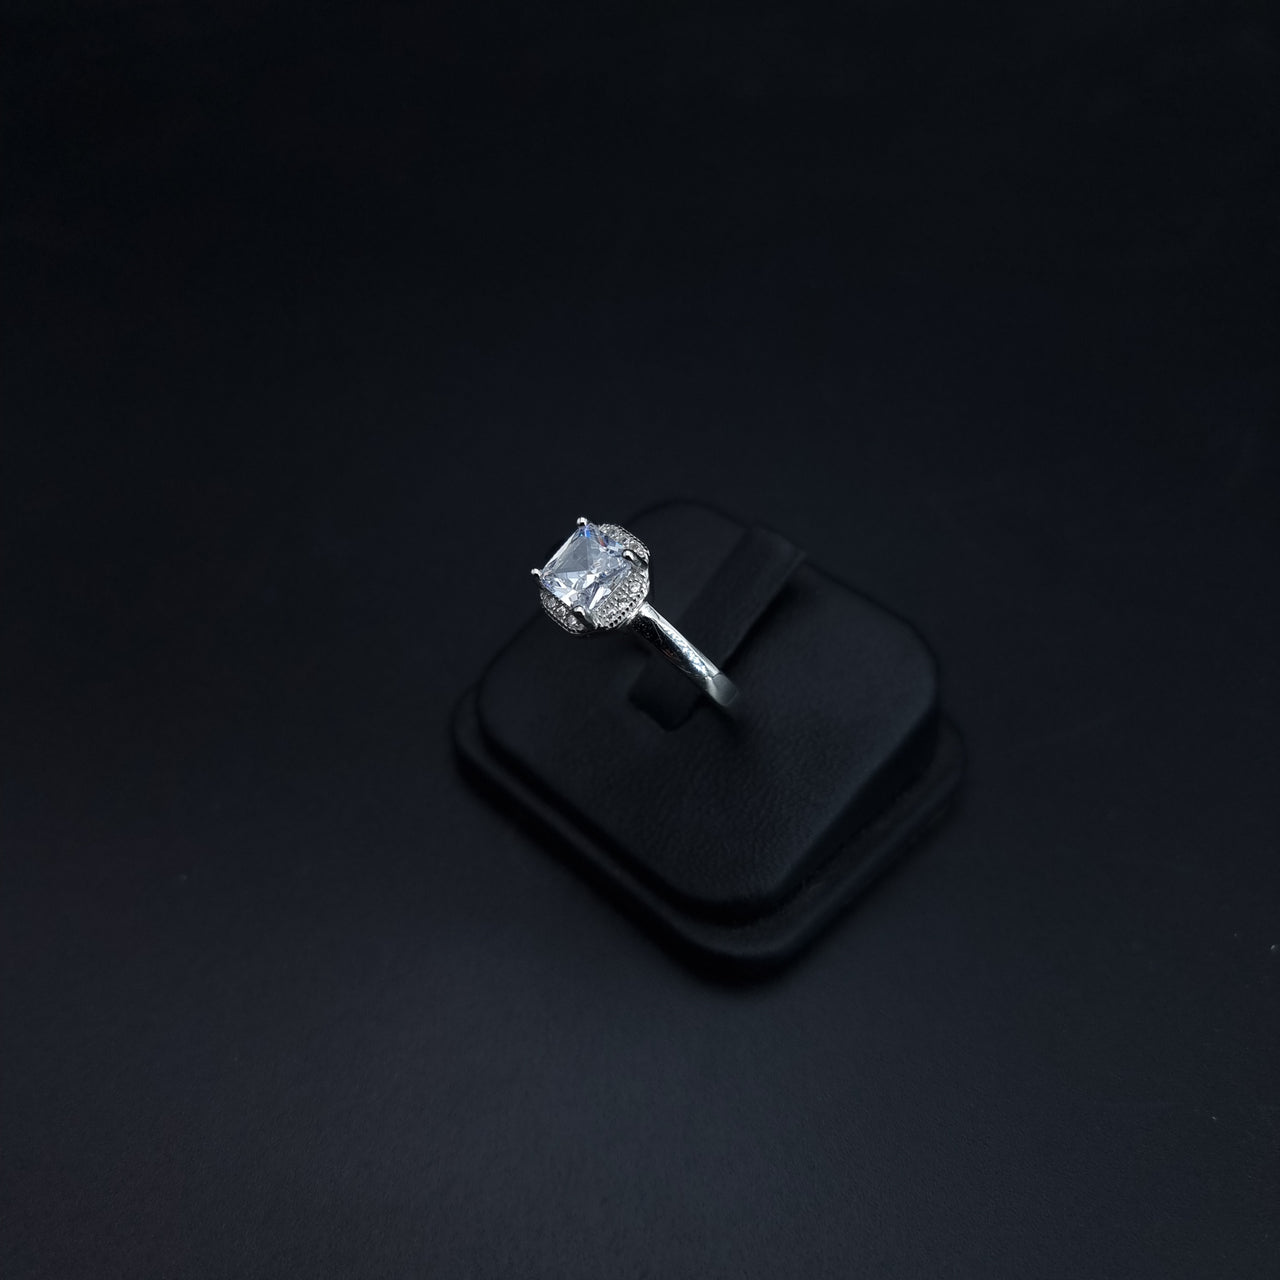 Wedding Ring With Central Zircon Stone SLPRG0144